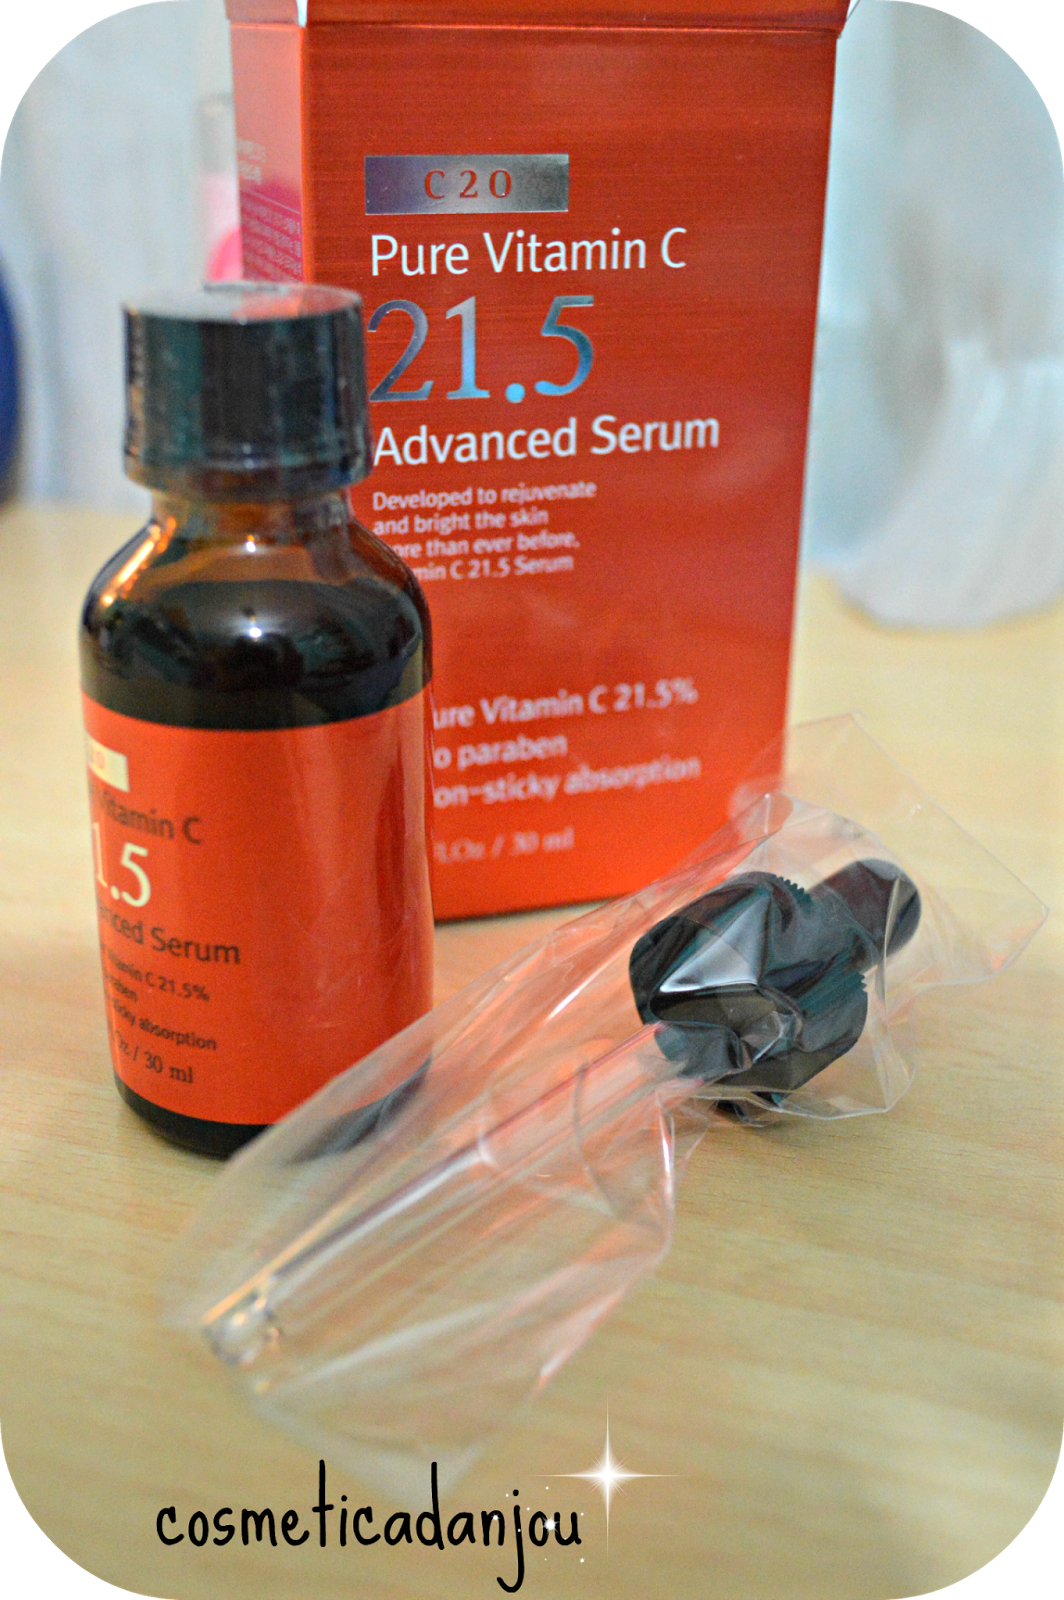 C20 - Pure Vitamin C 21.5 Advanced Serum Review (Wishtrend)